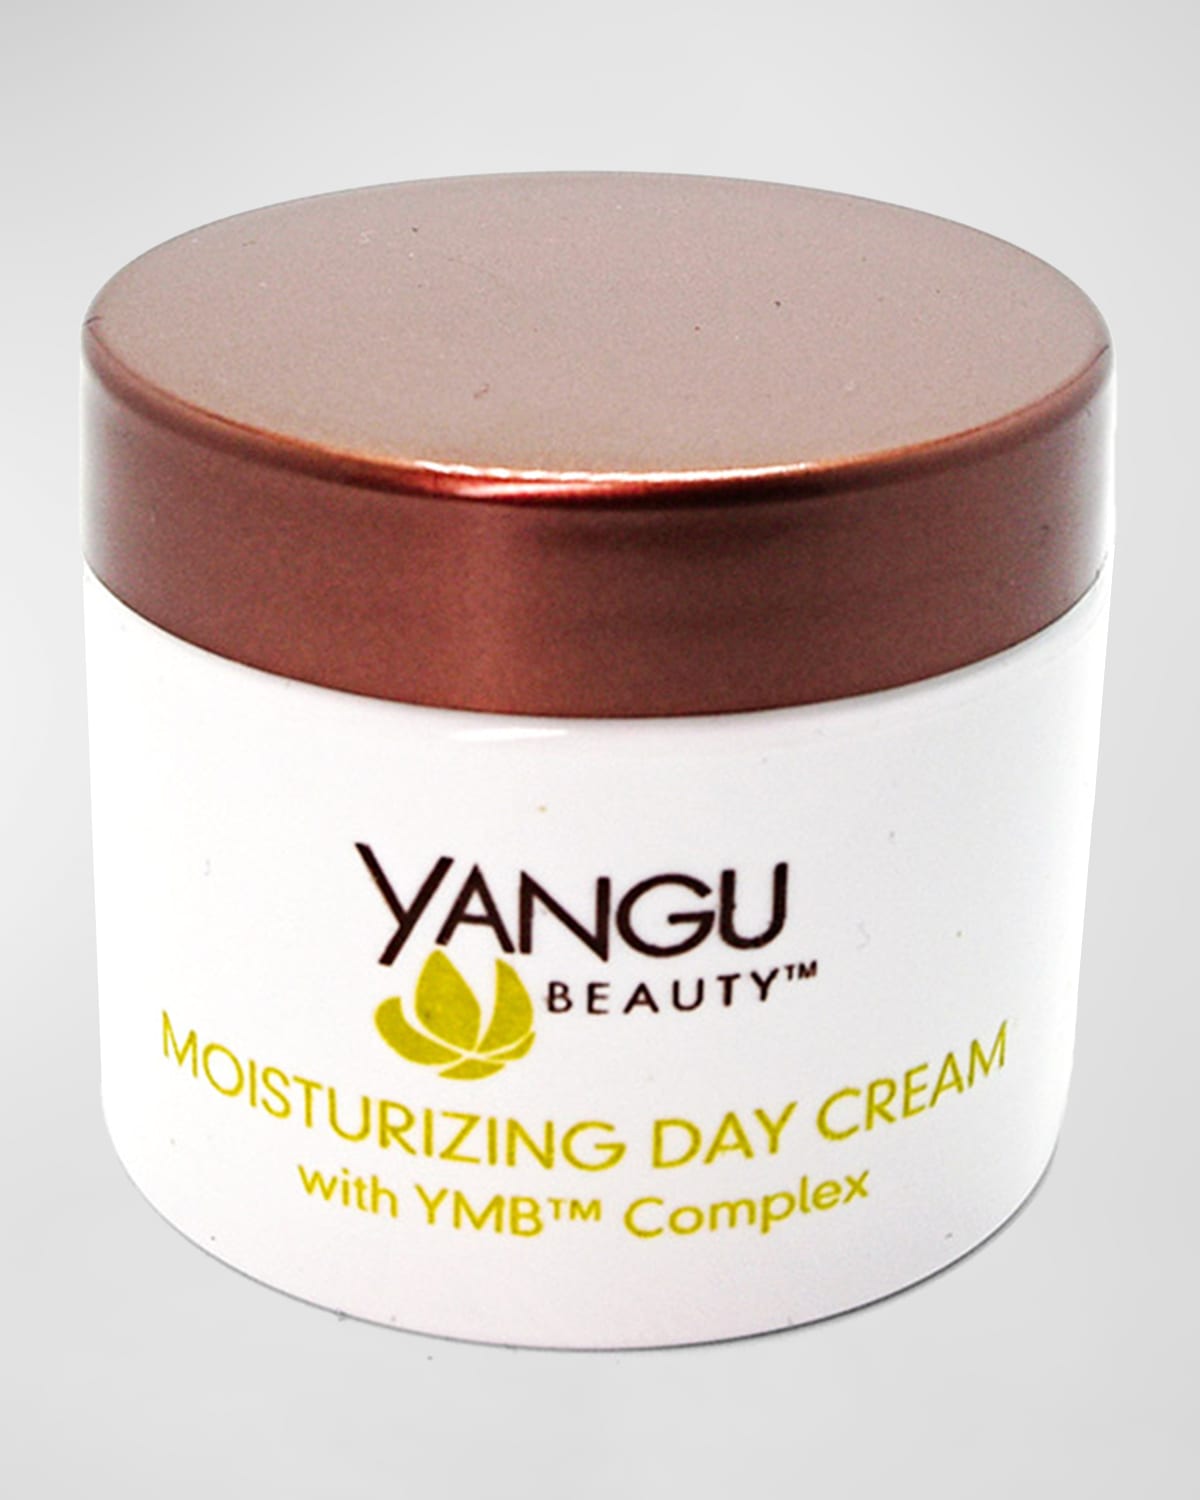 Moisturizing Day Cream, 1.7 oz.